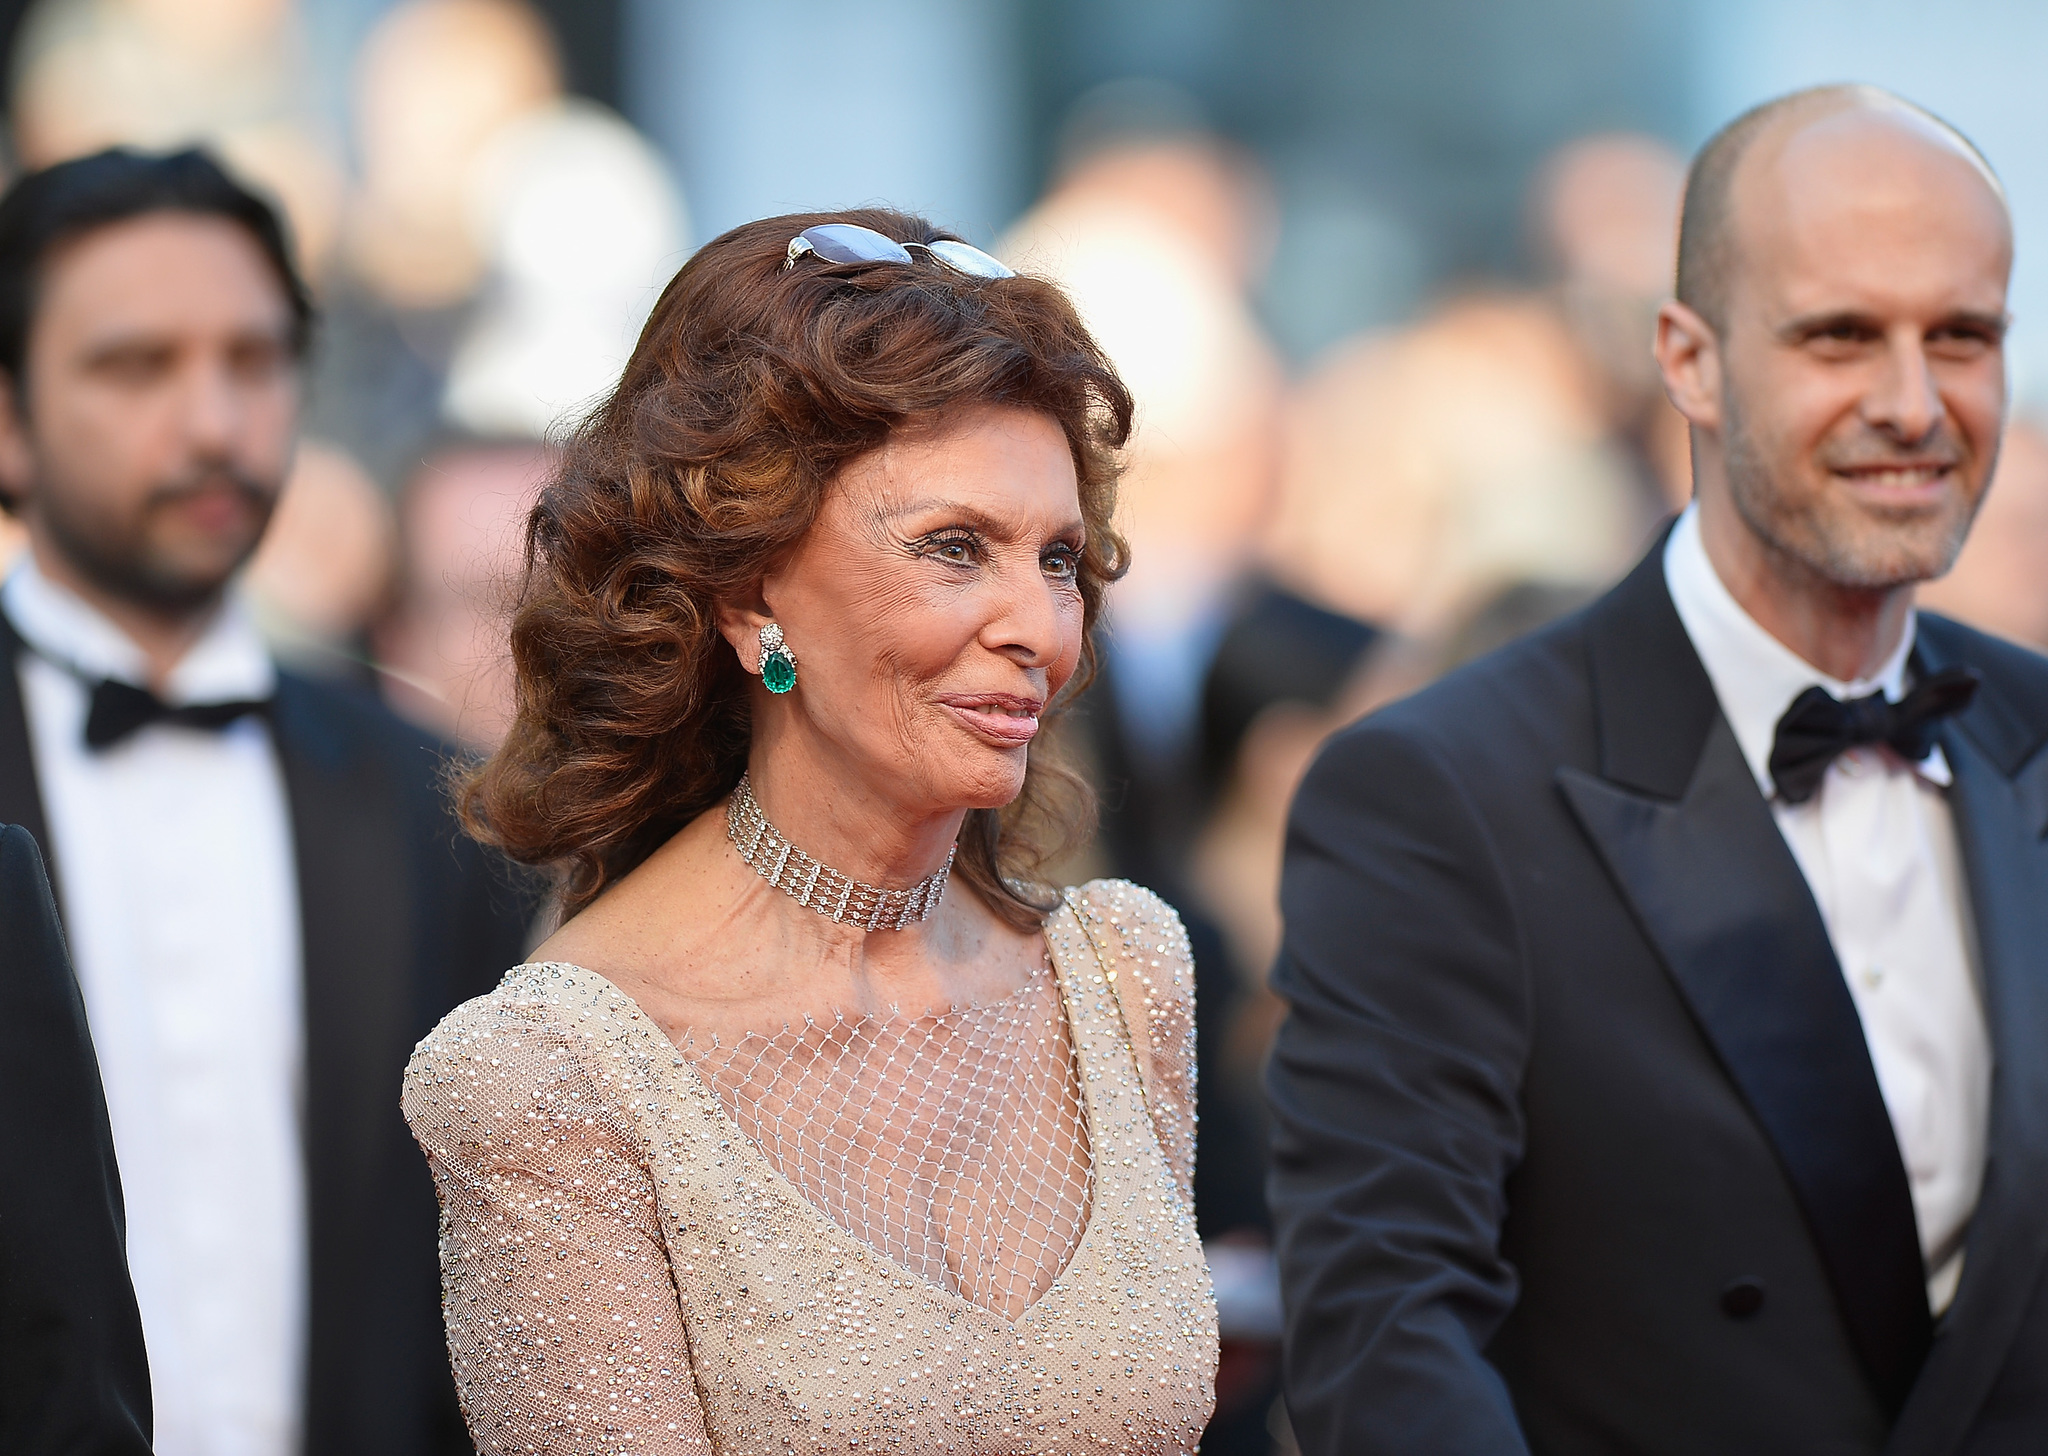 Sophia Loren and son, director Edoardo Pont attend the 